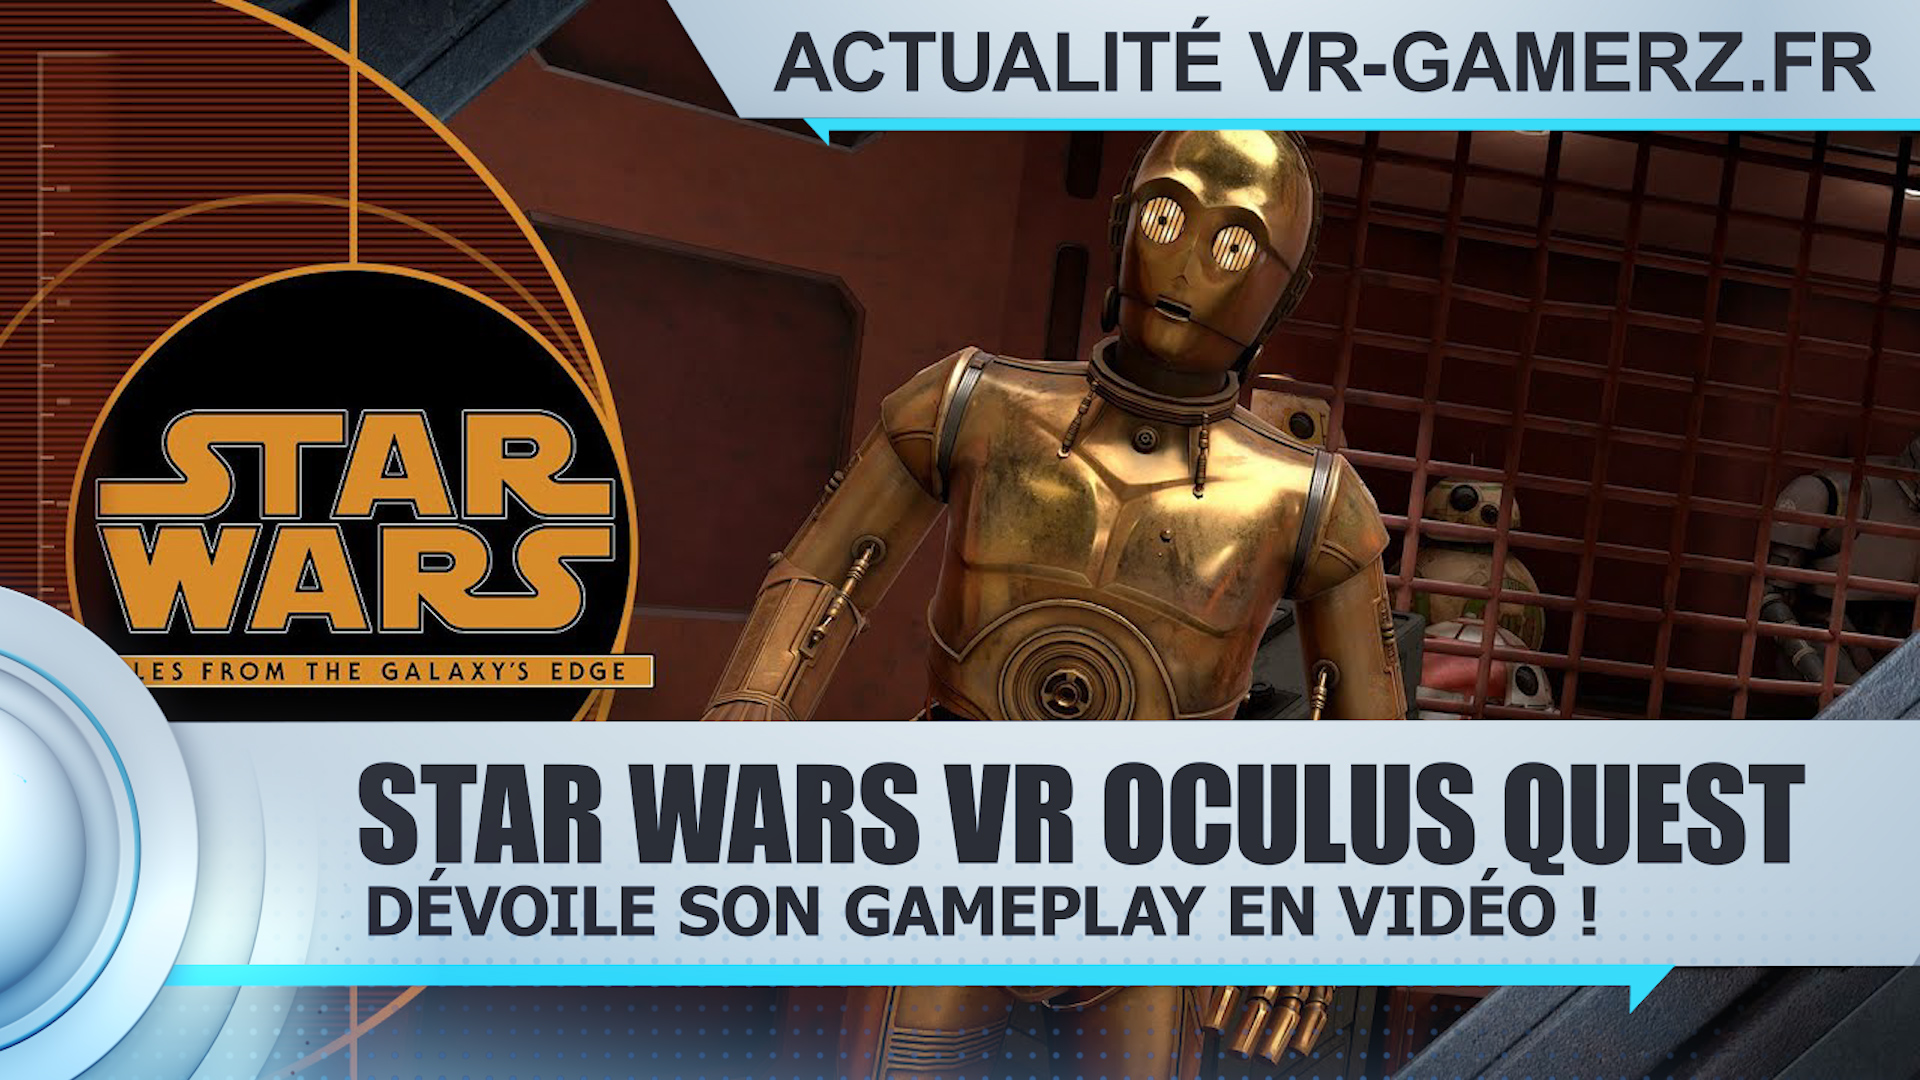 Star Wars VR Oculus quest dévoile son gameplay